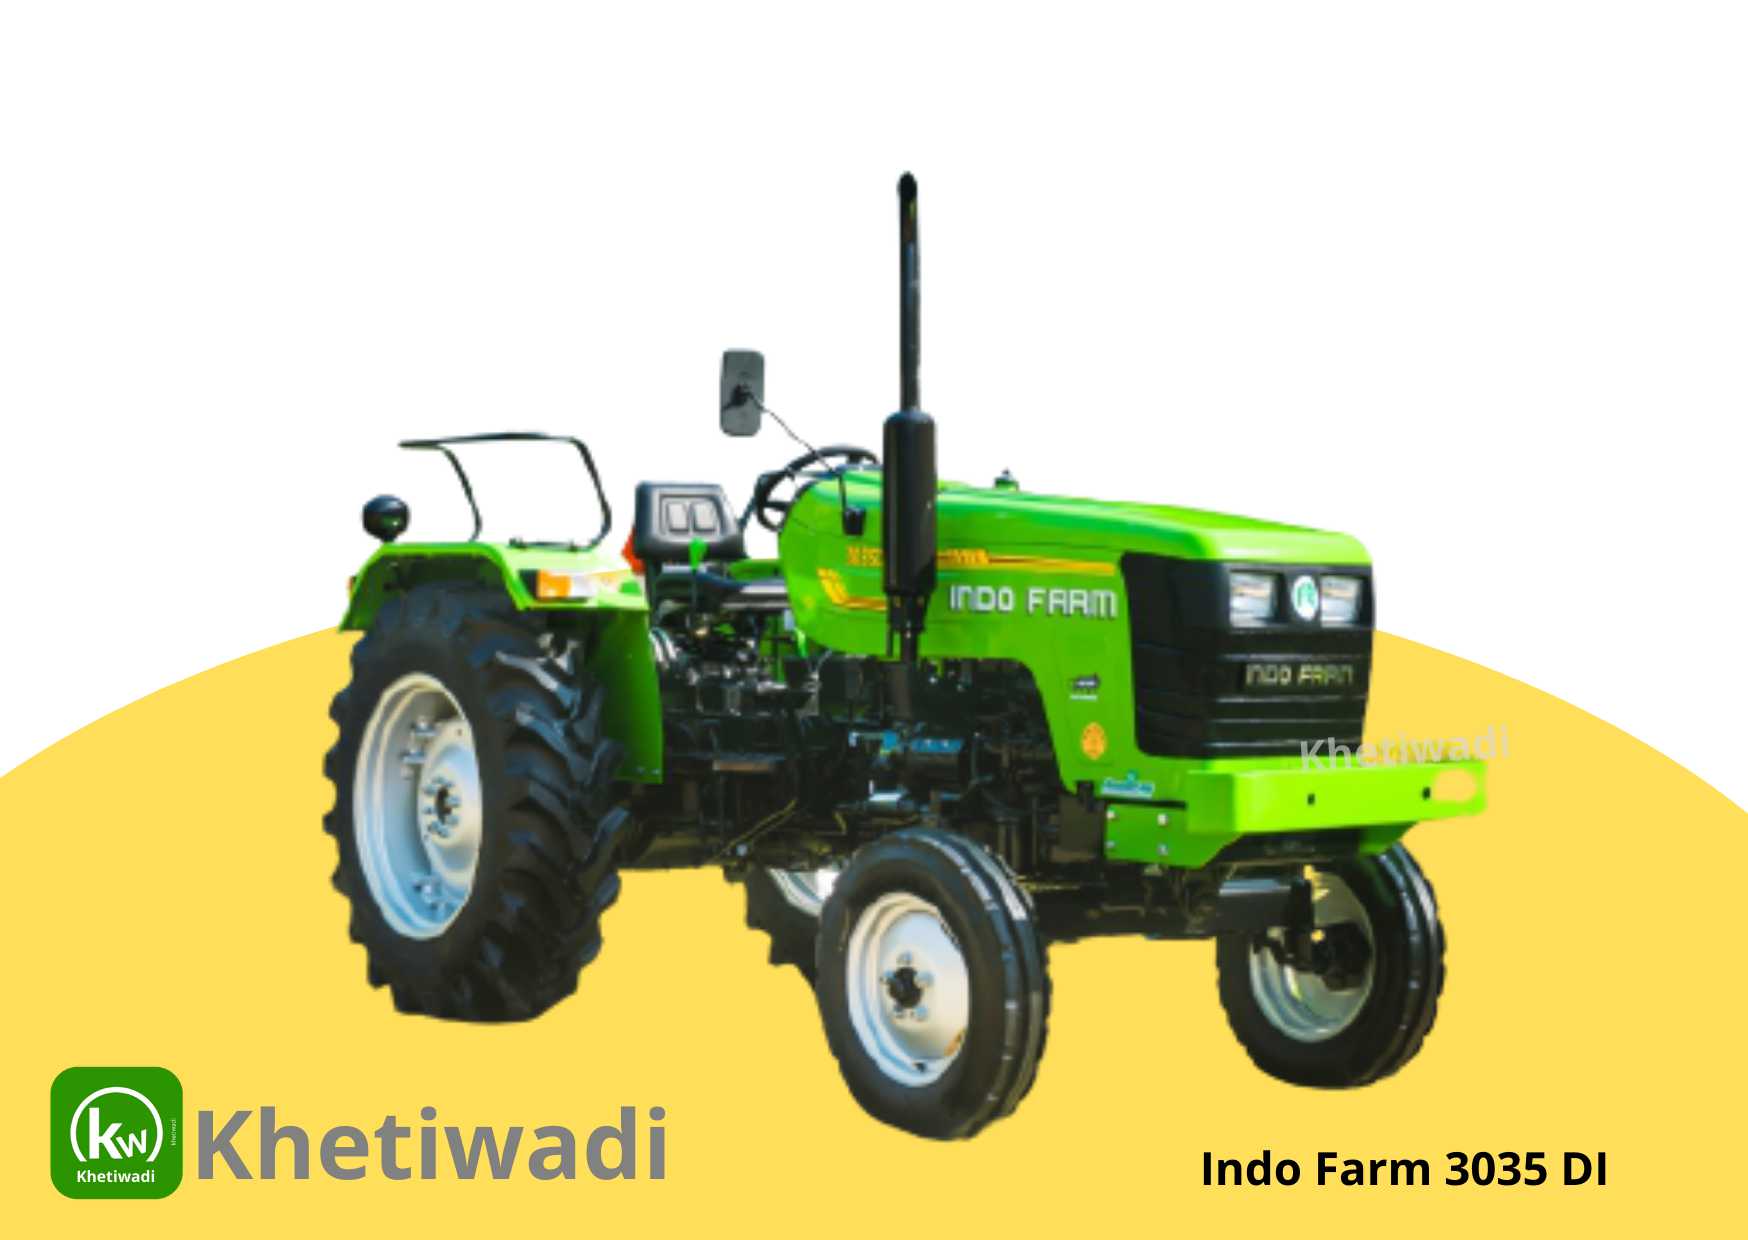 Indo Farm 3035 DI full detail